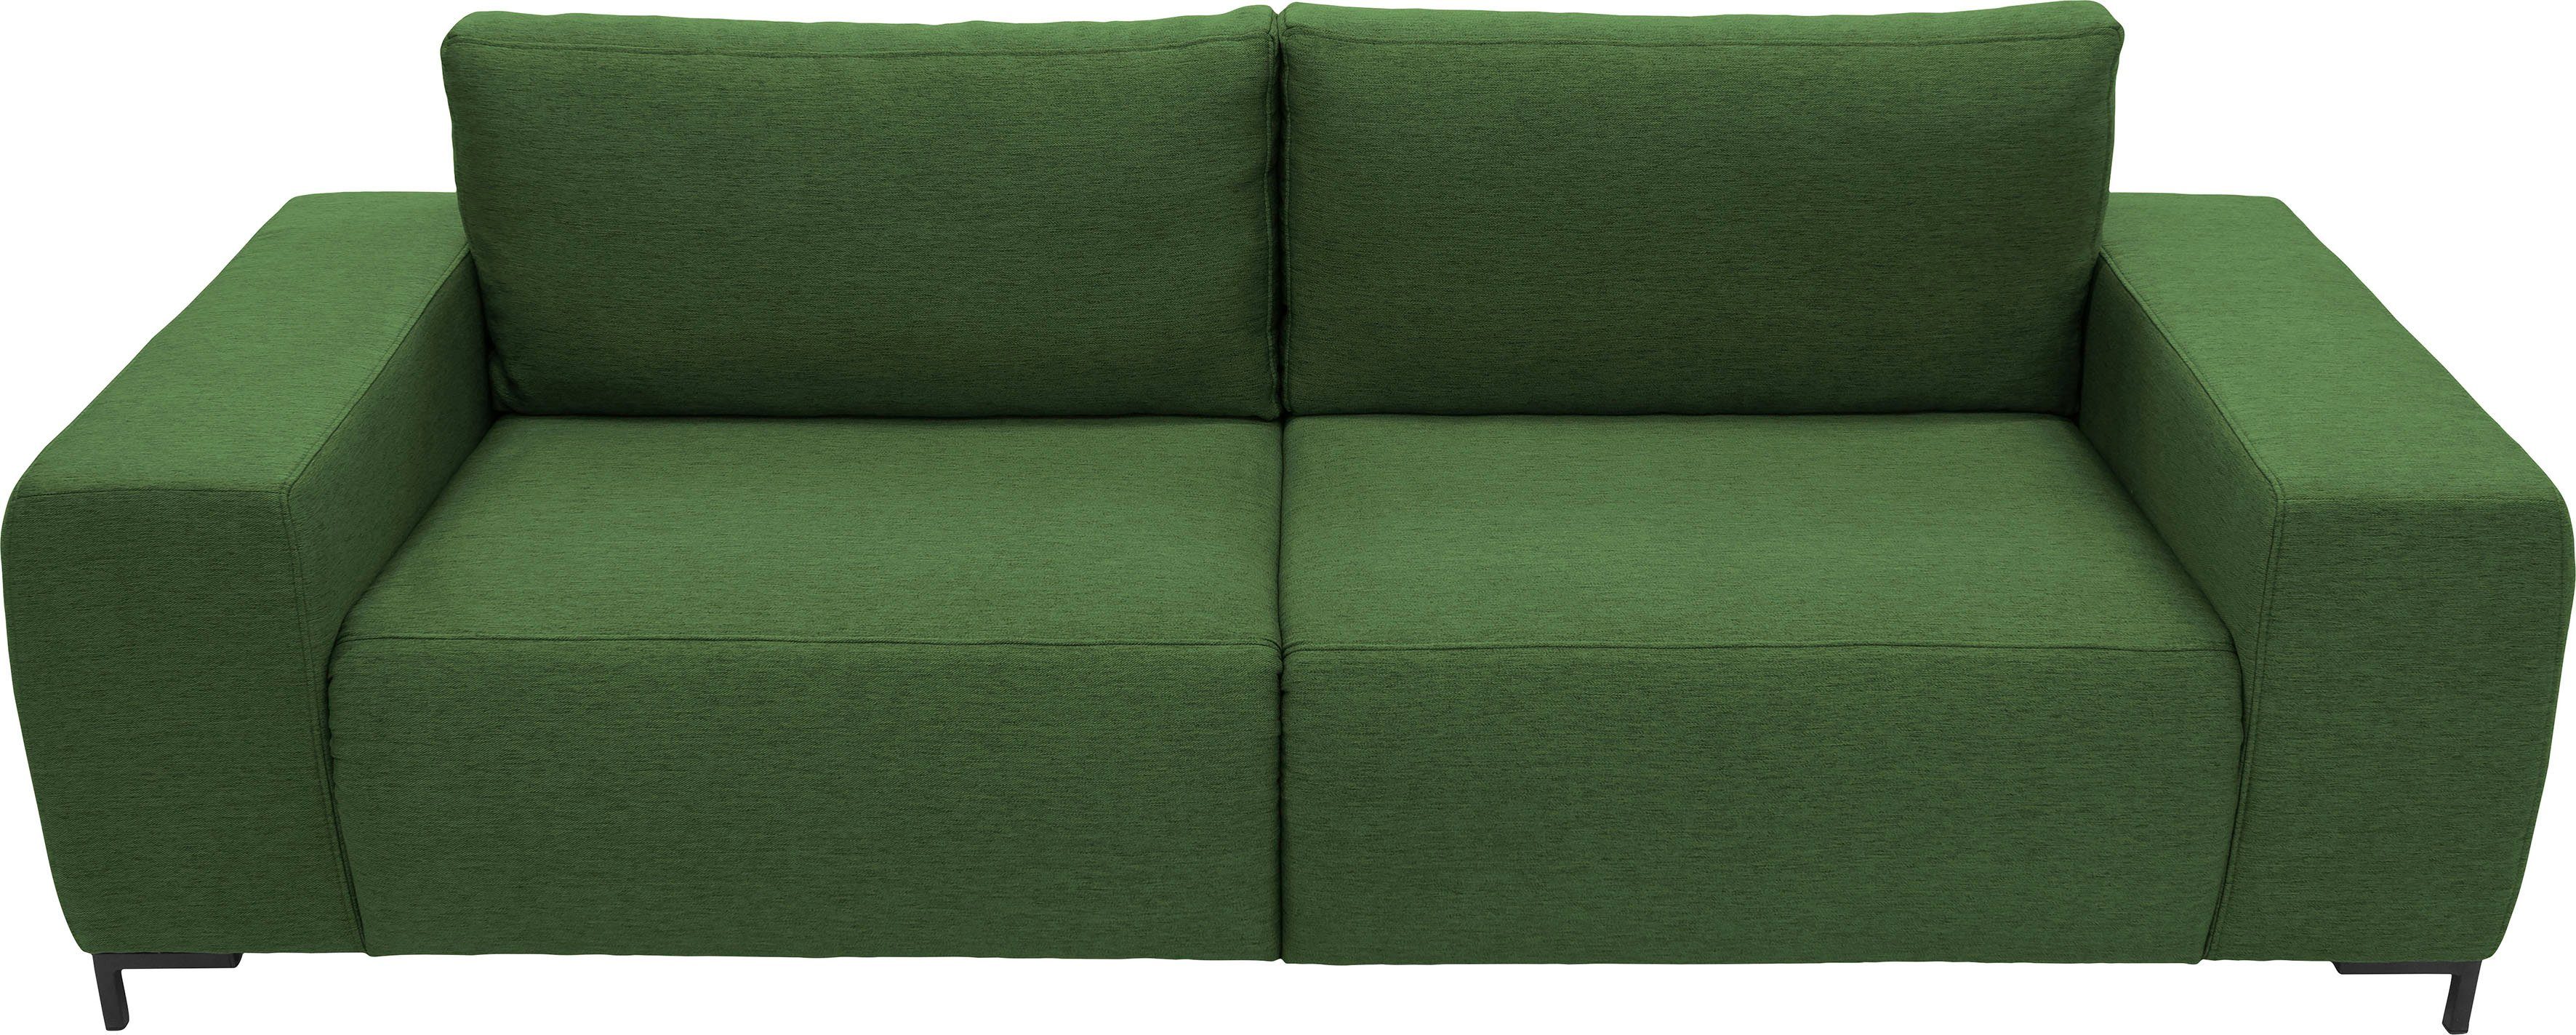 gerade 2 Big-Sofa in Bezugsqualitäten Joop by VI, Linien, LOOKS Looks Wolfgang